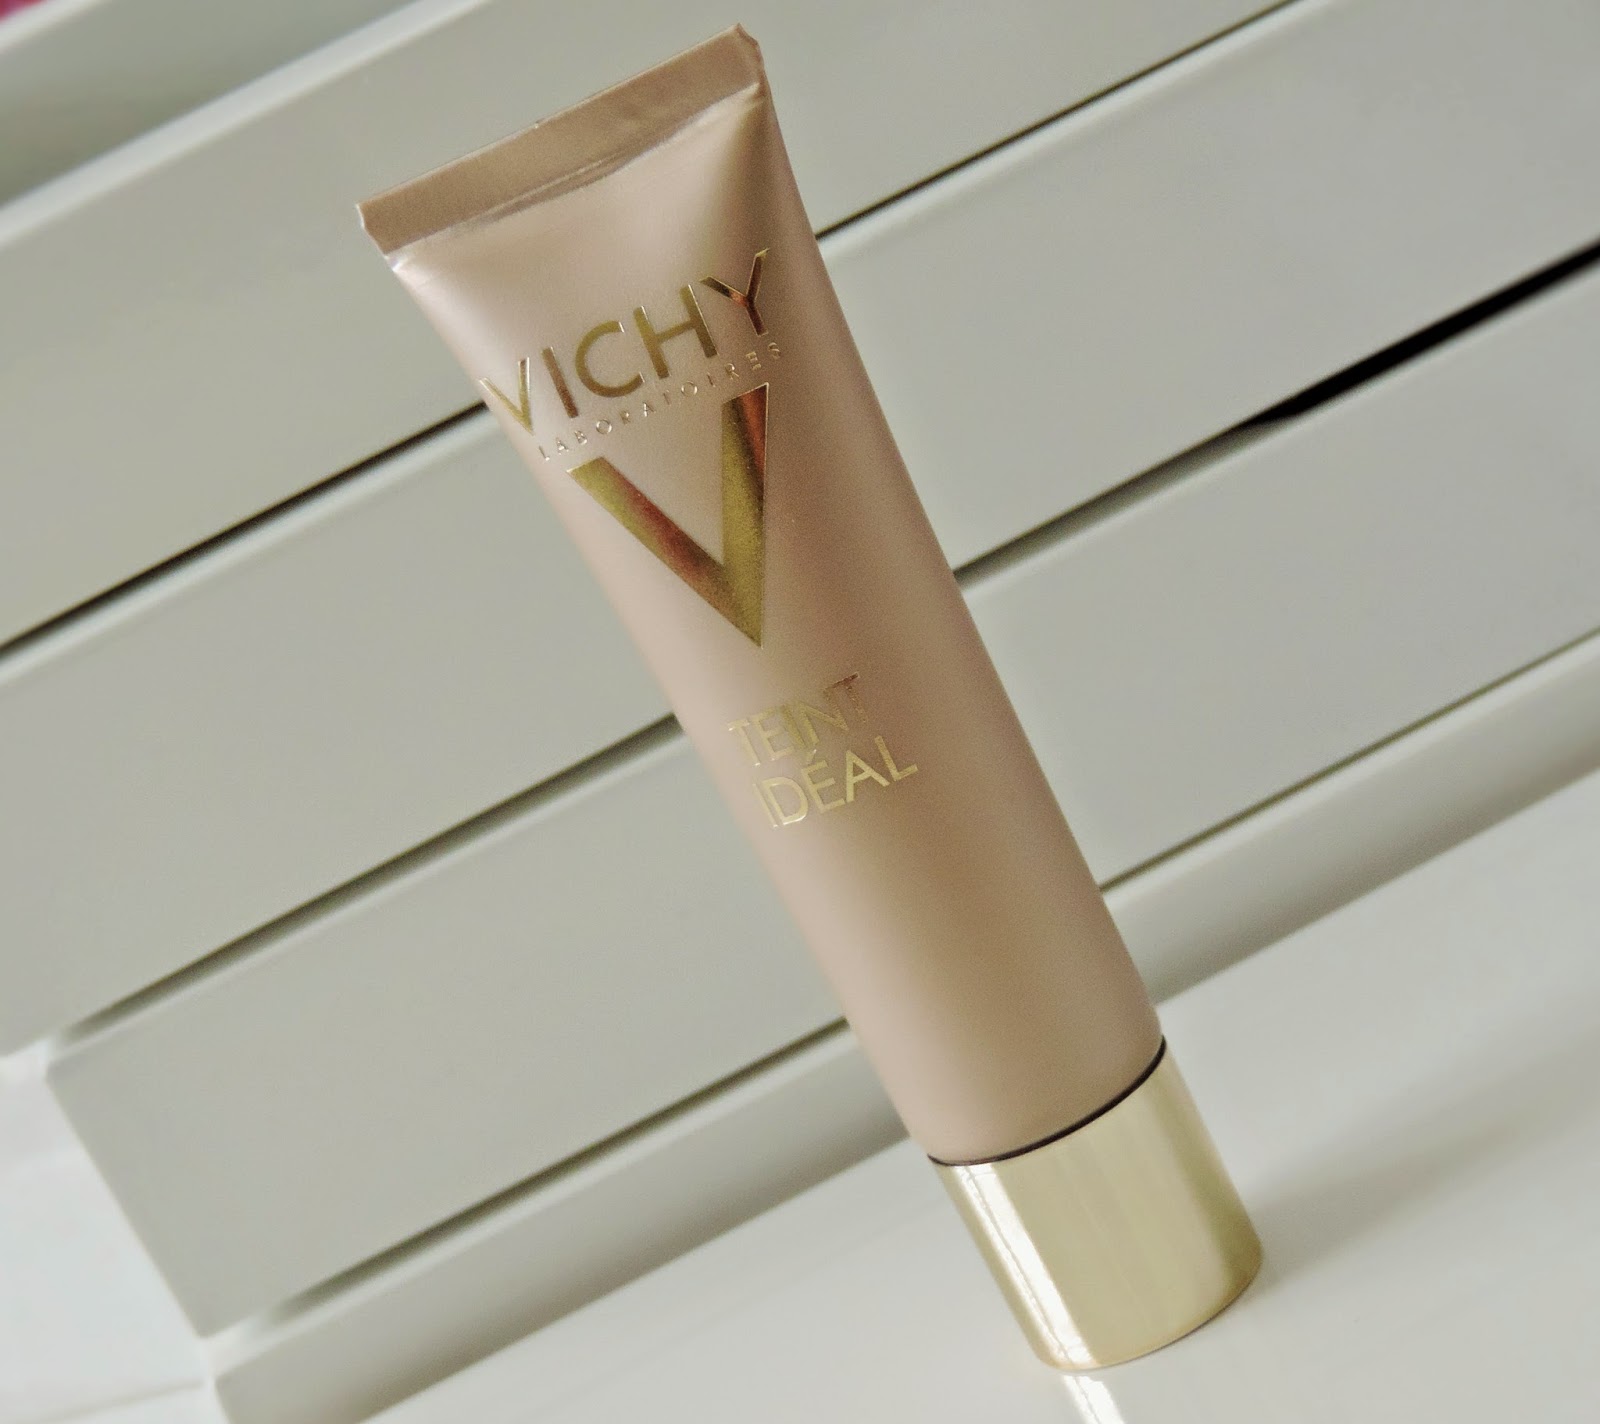 Vichy Teint Ideal Cream Foundation